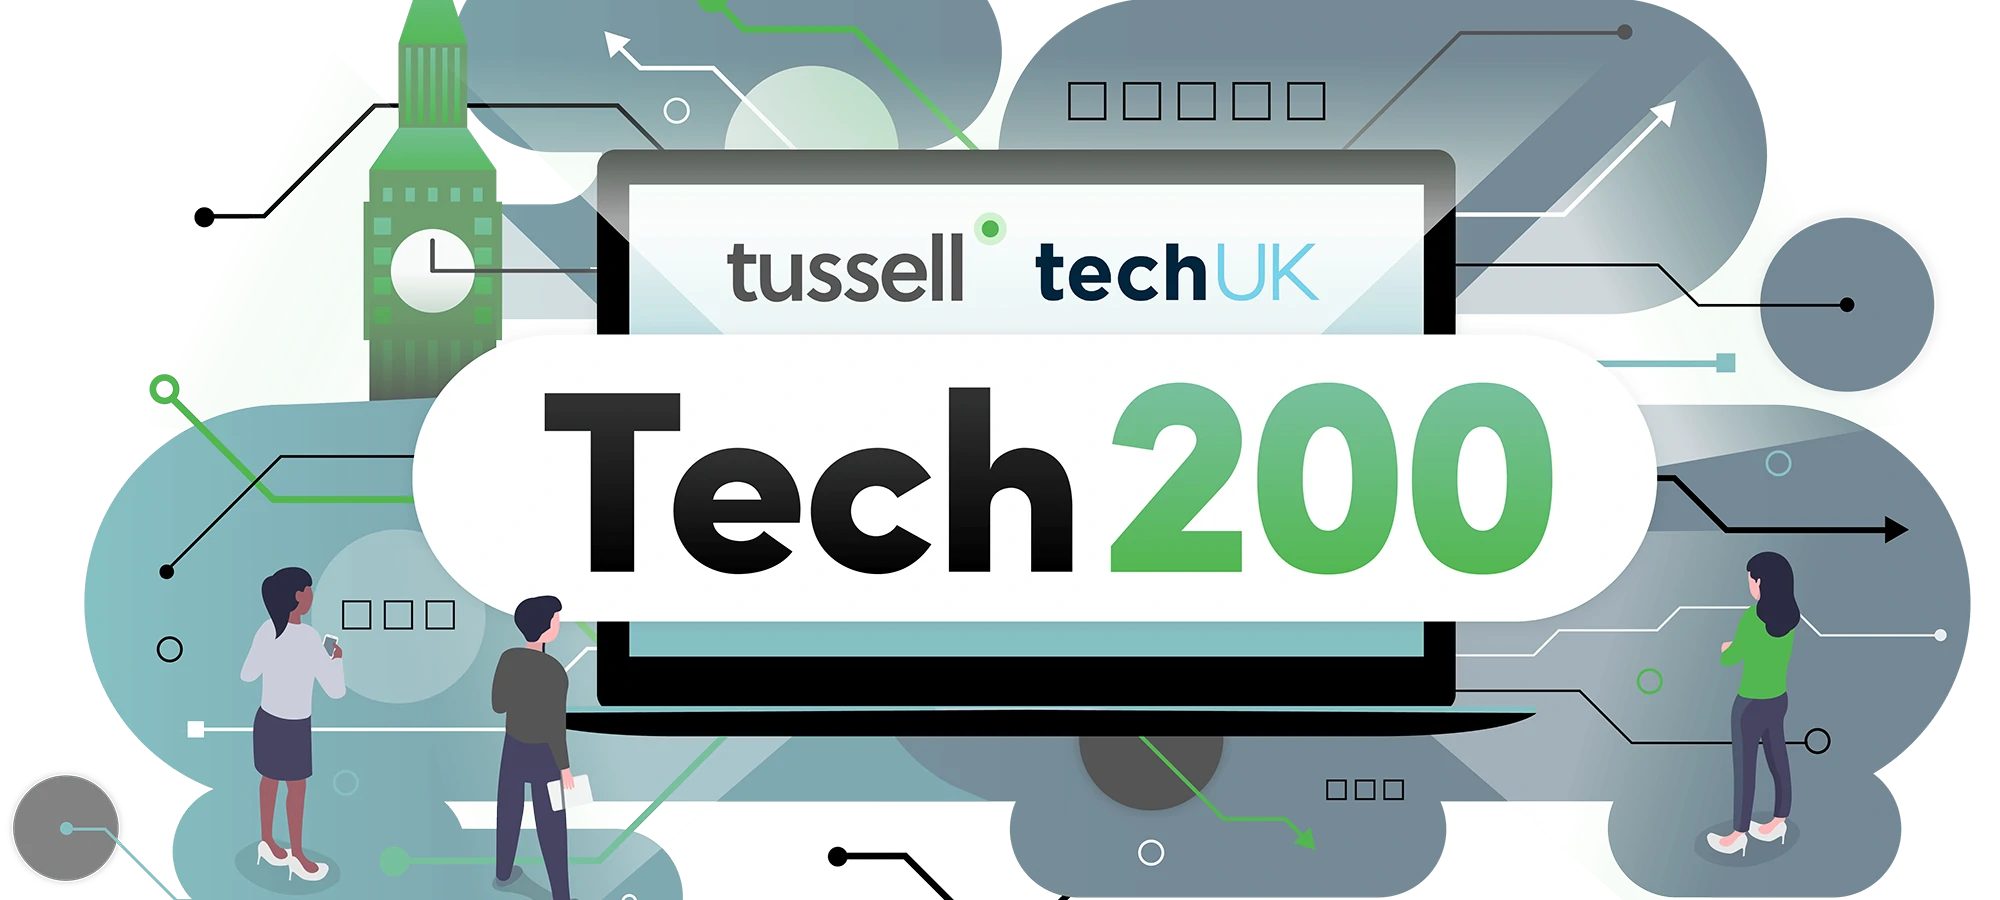 tusseltech200 logo